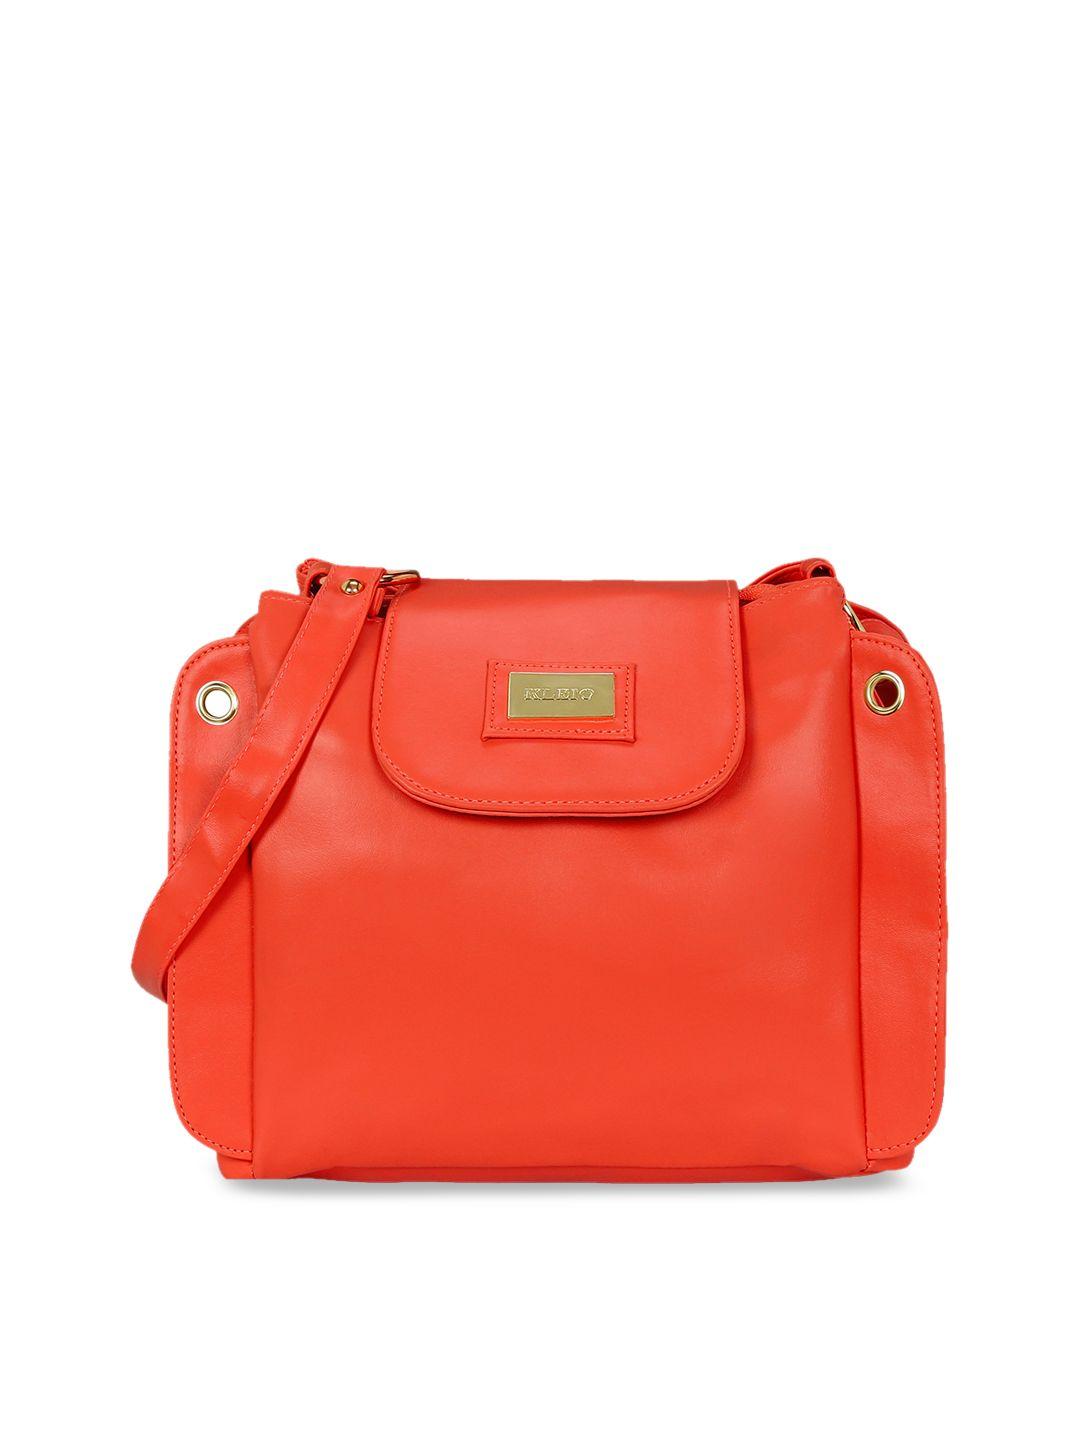 kleio red solid sling bag